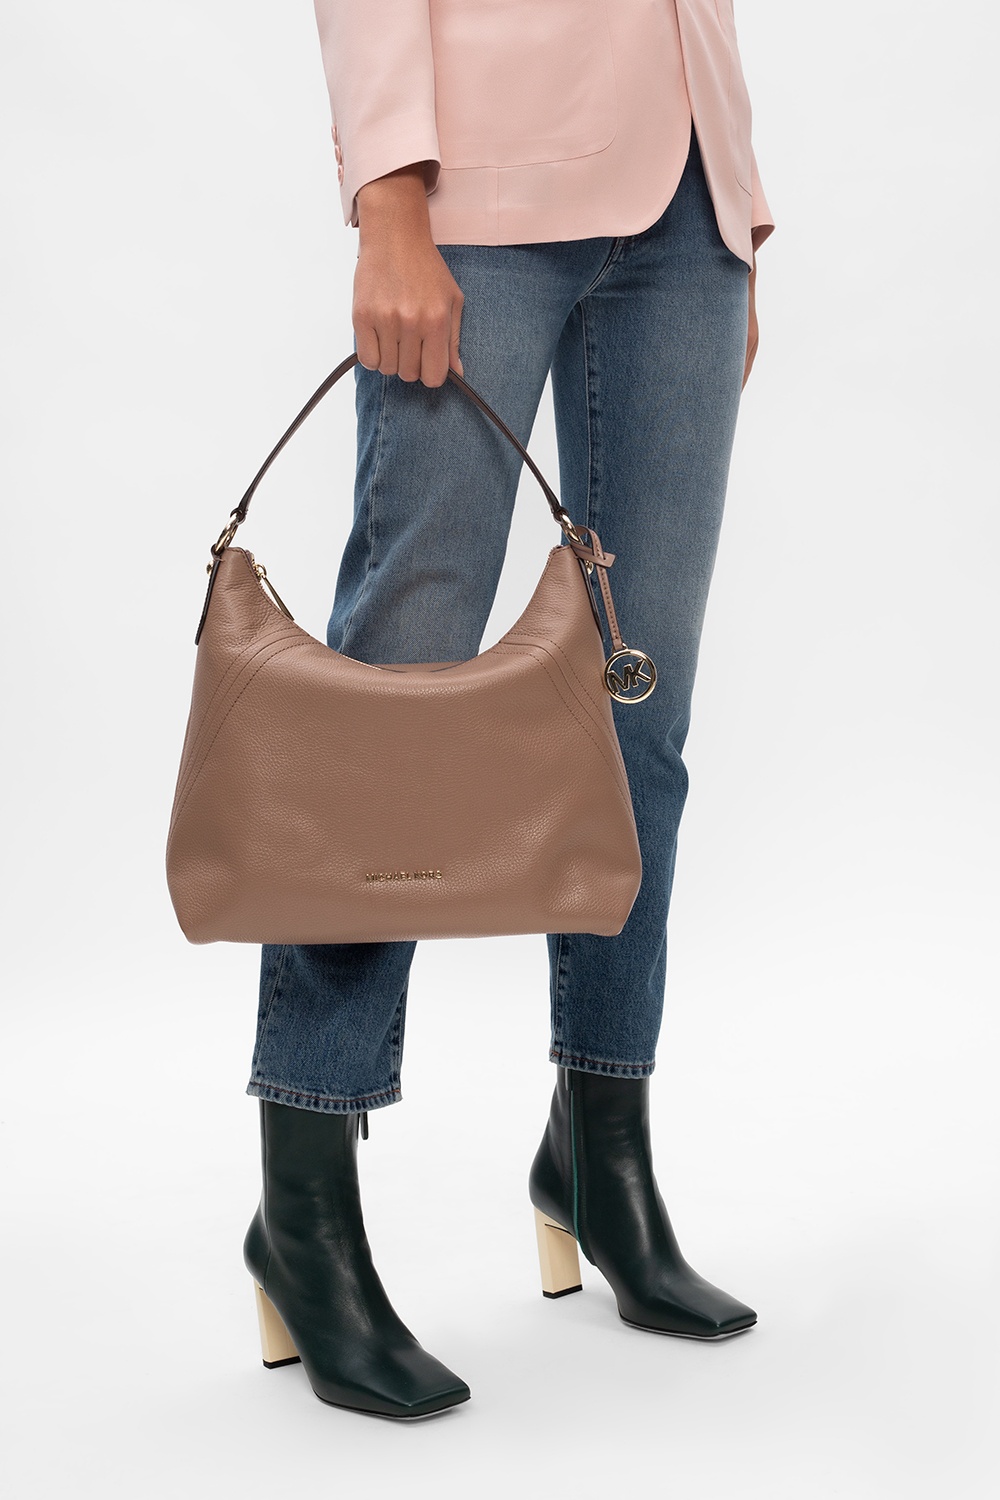 Michael Kors Aria Large Shoulder Bag